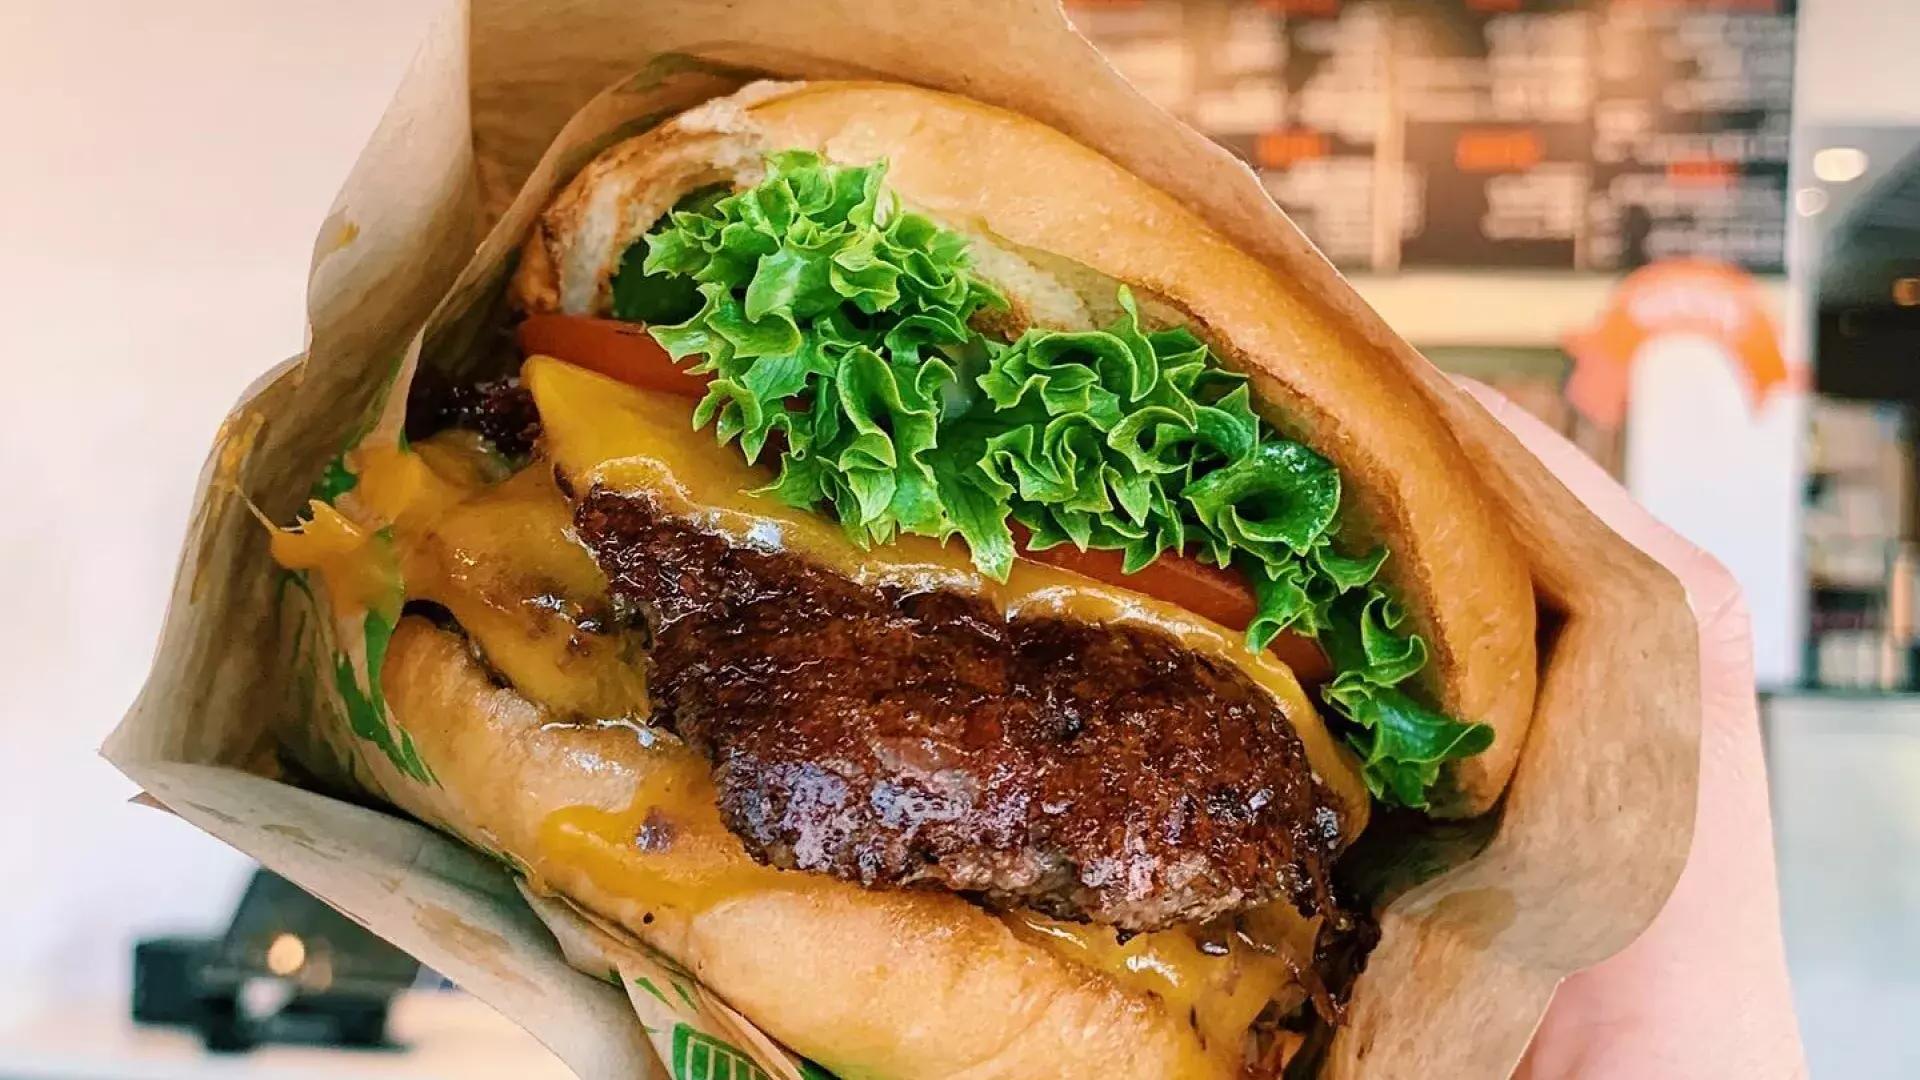 Un double cheeseburger du super duper de San Francisco.